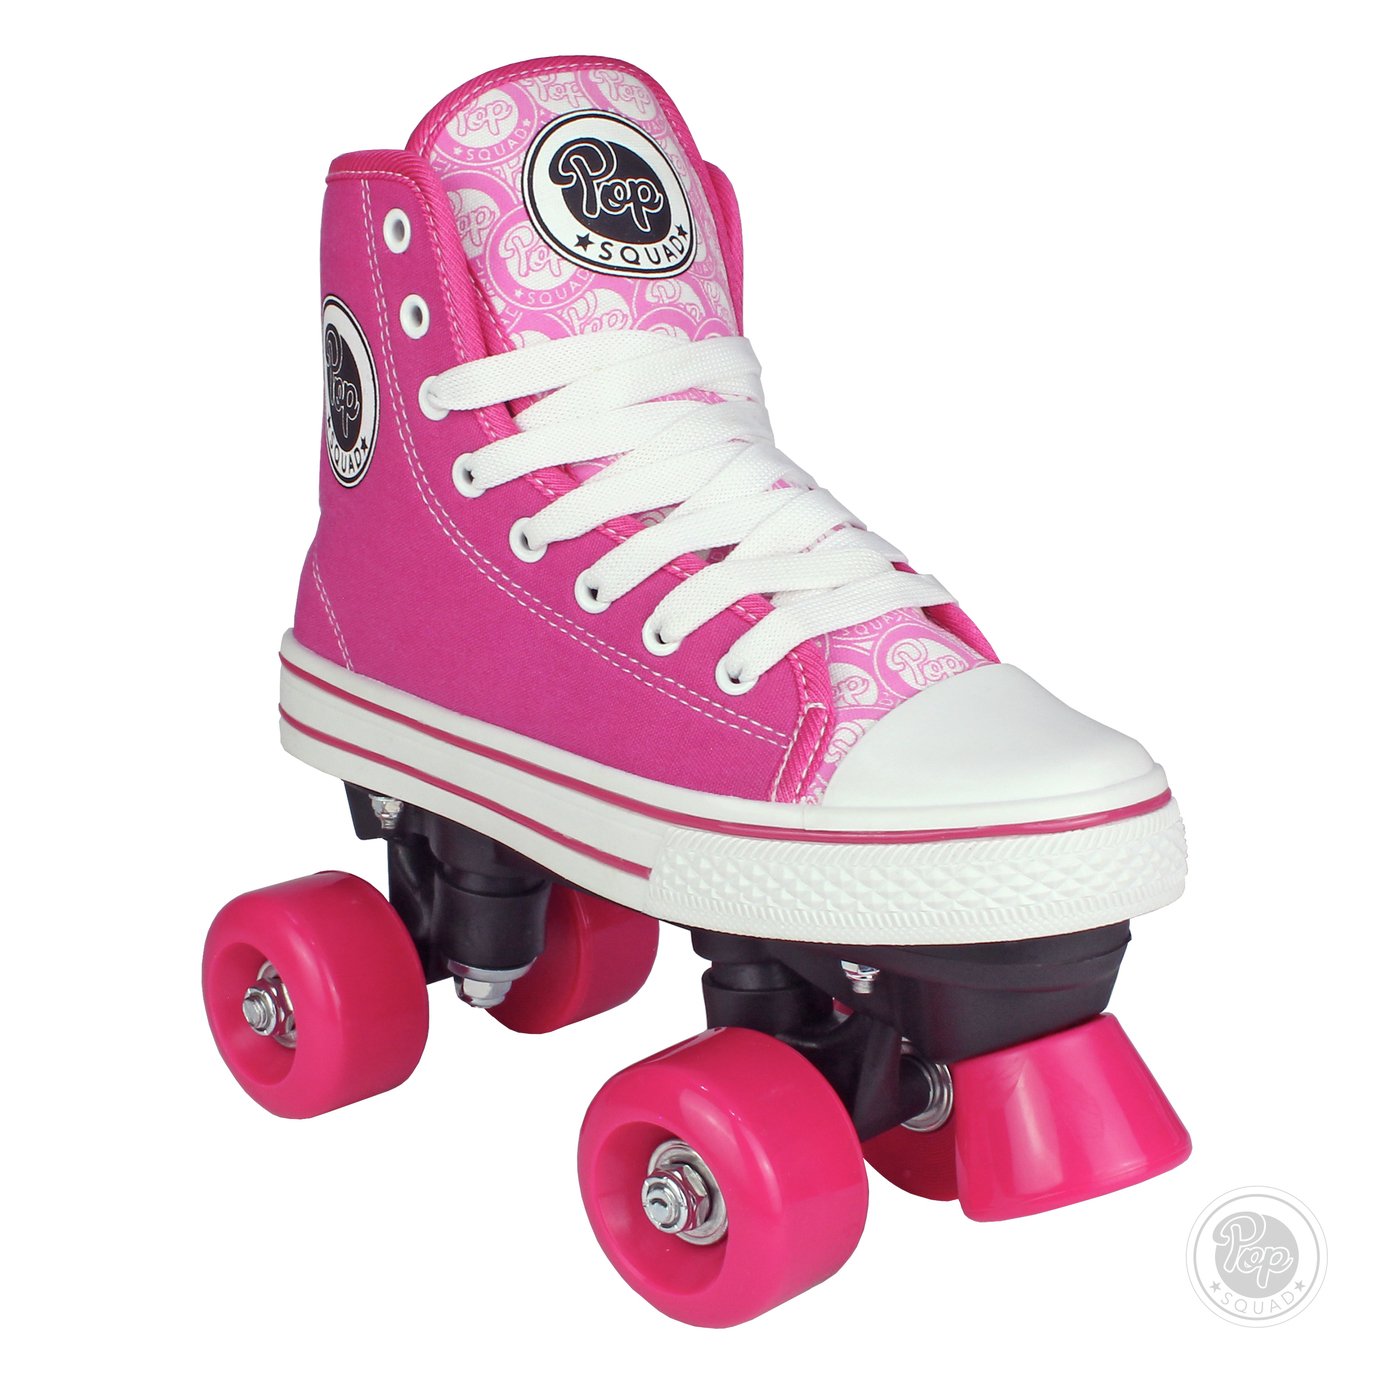 Pop Squad Pink Midtown Quad Skate - Size 3